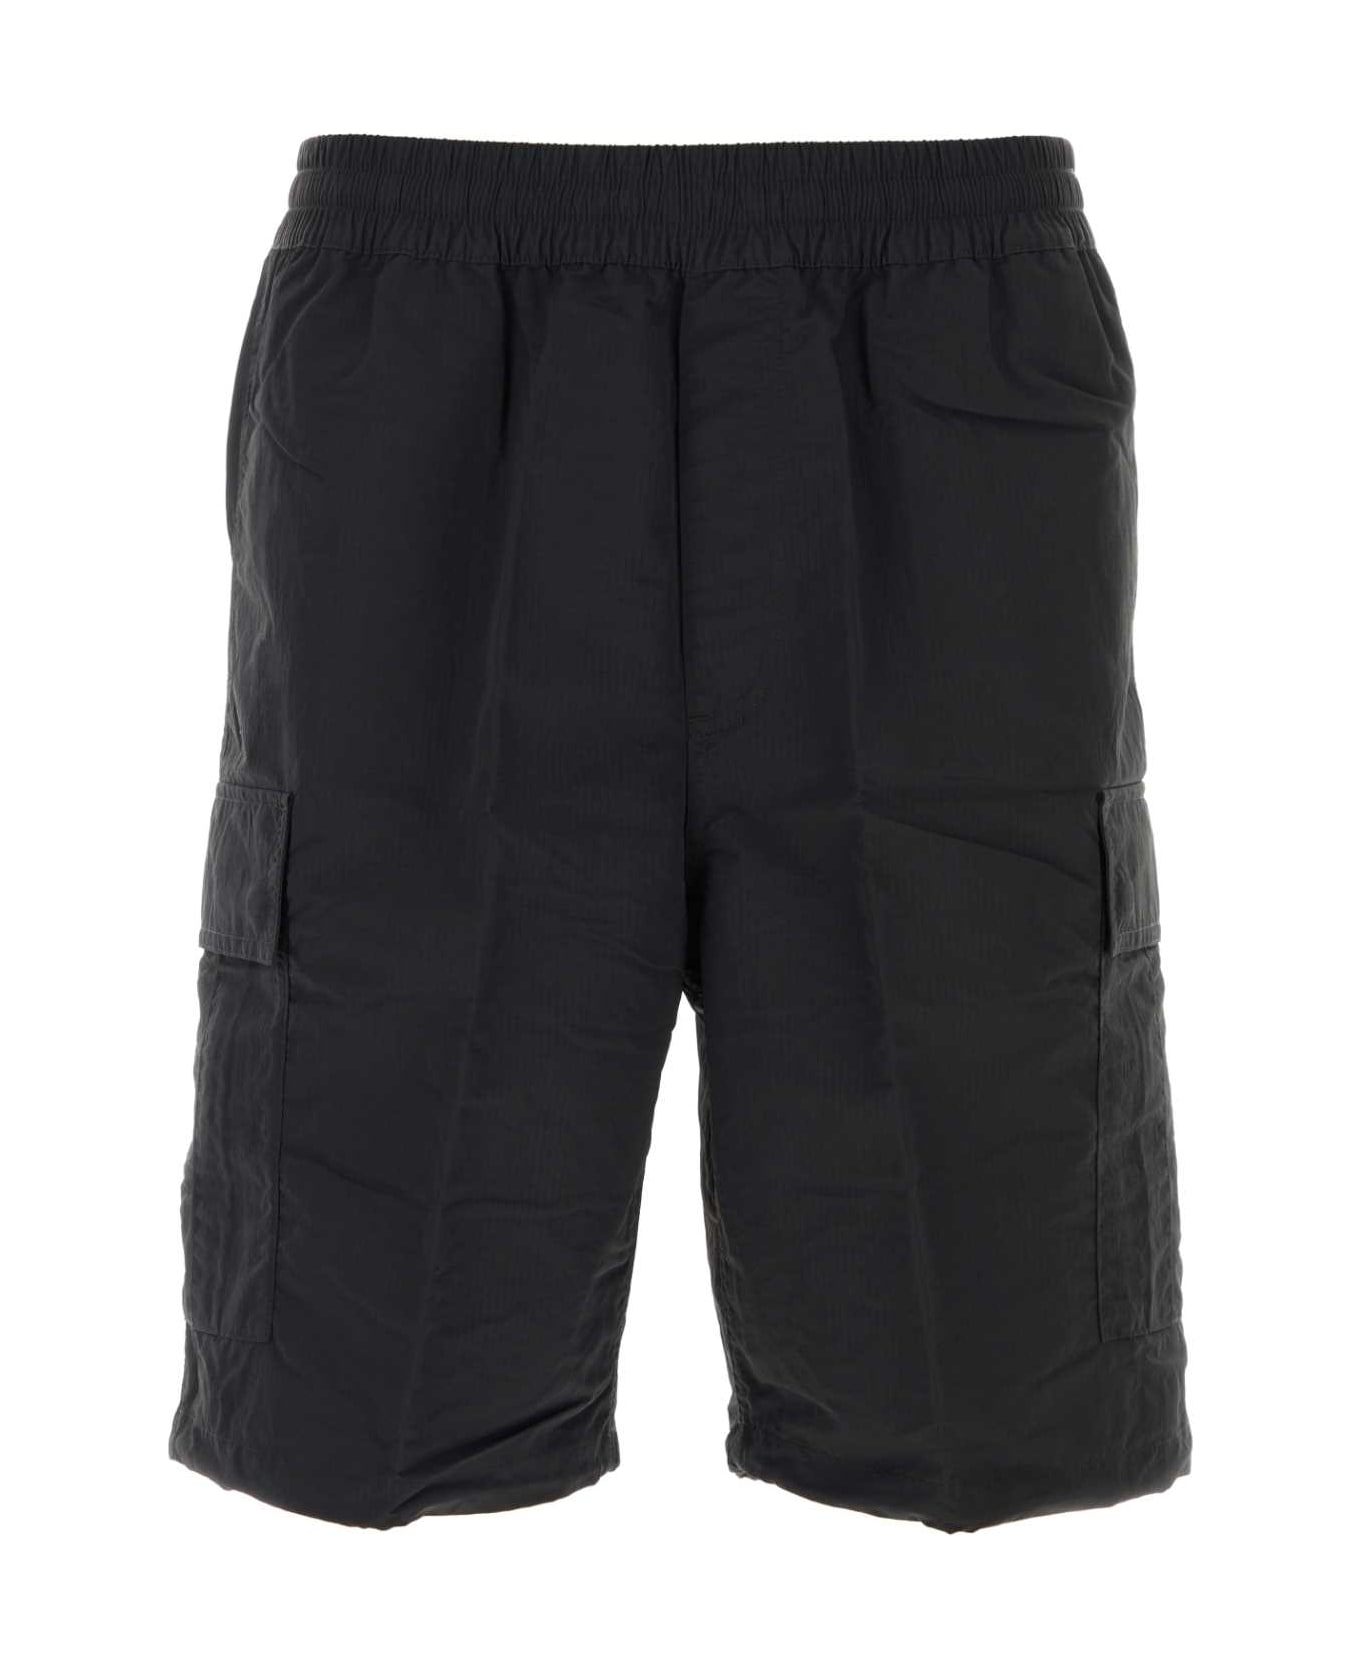 Carhartt Black Nylon Evers Cargo Shorts - ISIMARDINPRIWHI